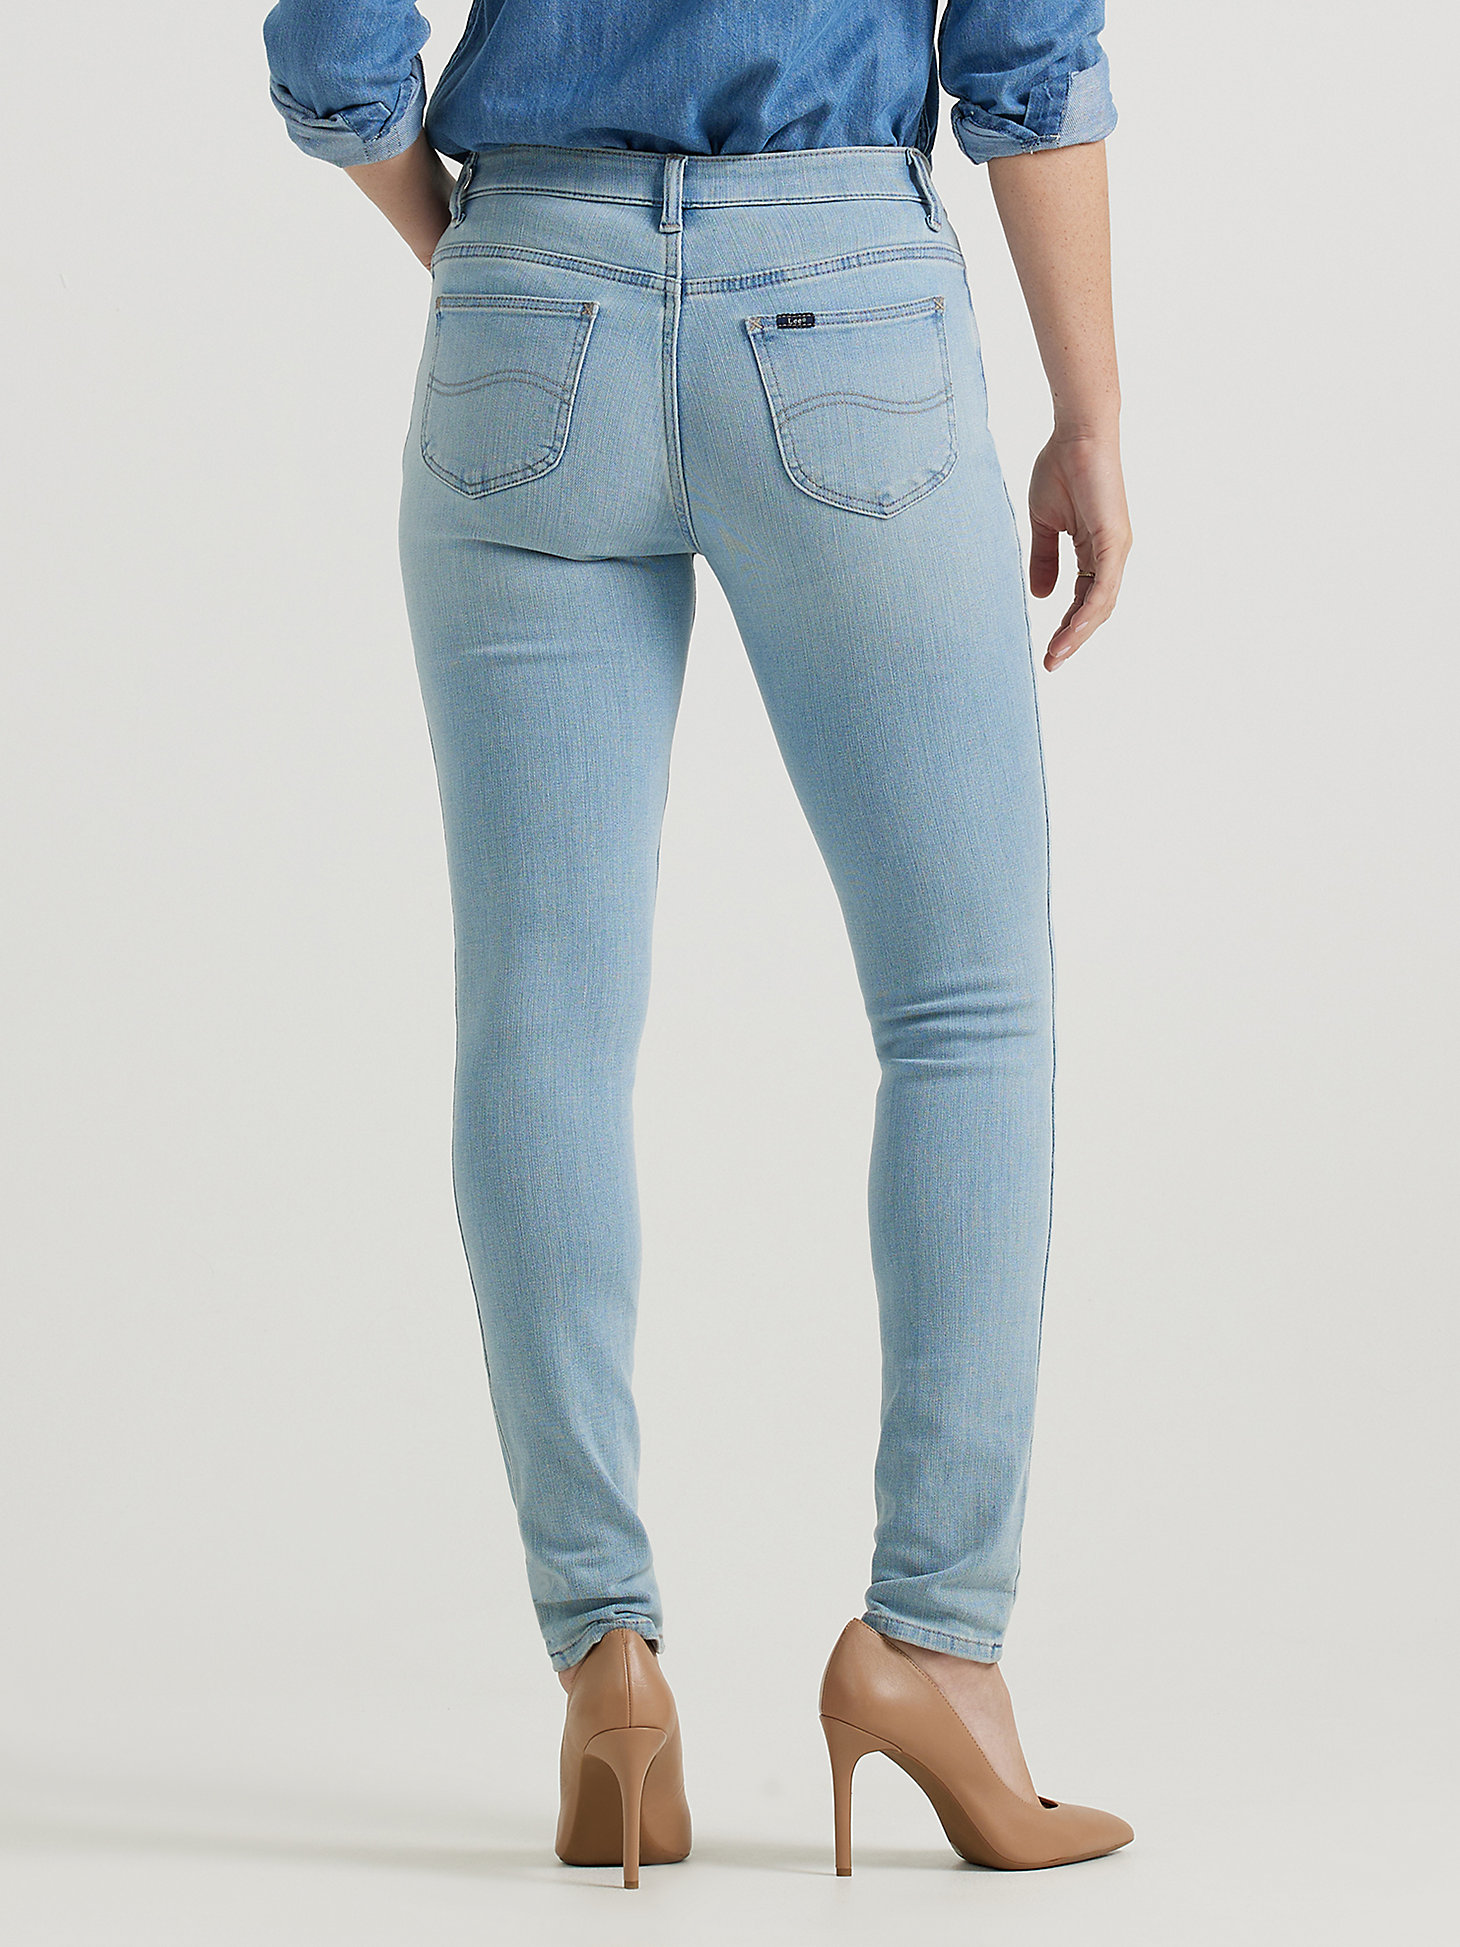 Women's Ultra Lux Comfort Slim Fit Skinny Jean in Jetstream alternative view 2